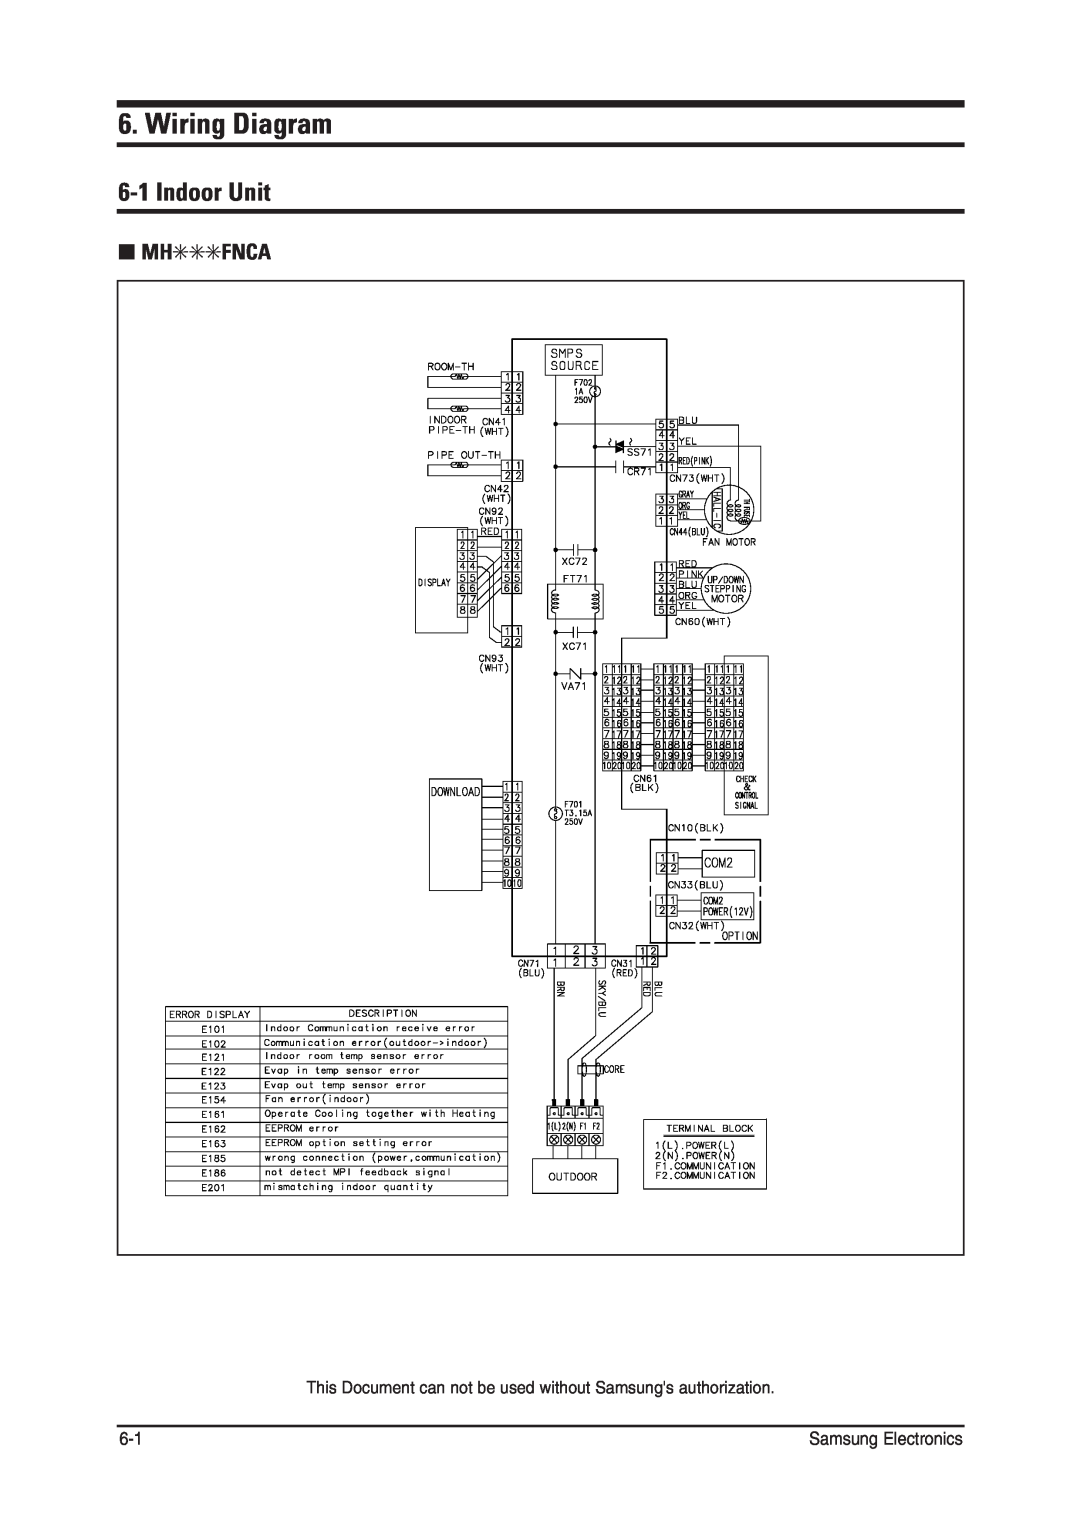 Samsung MH026FNCA service manual Wiring Diagram, 6-1Indoor Unit, Mhfnca 